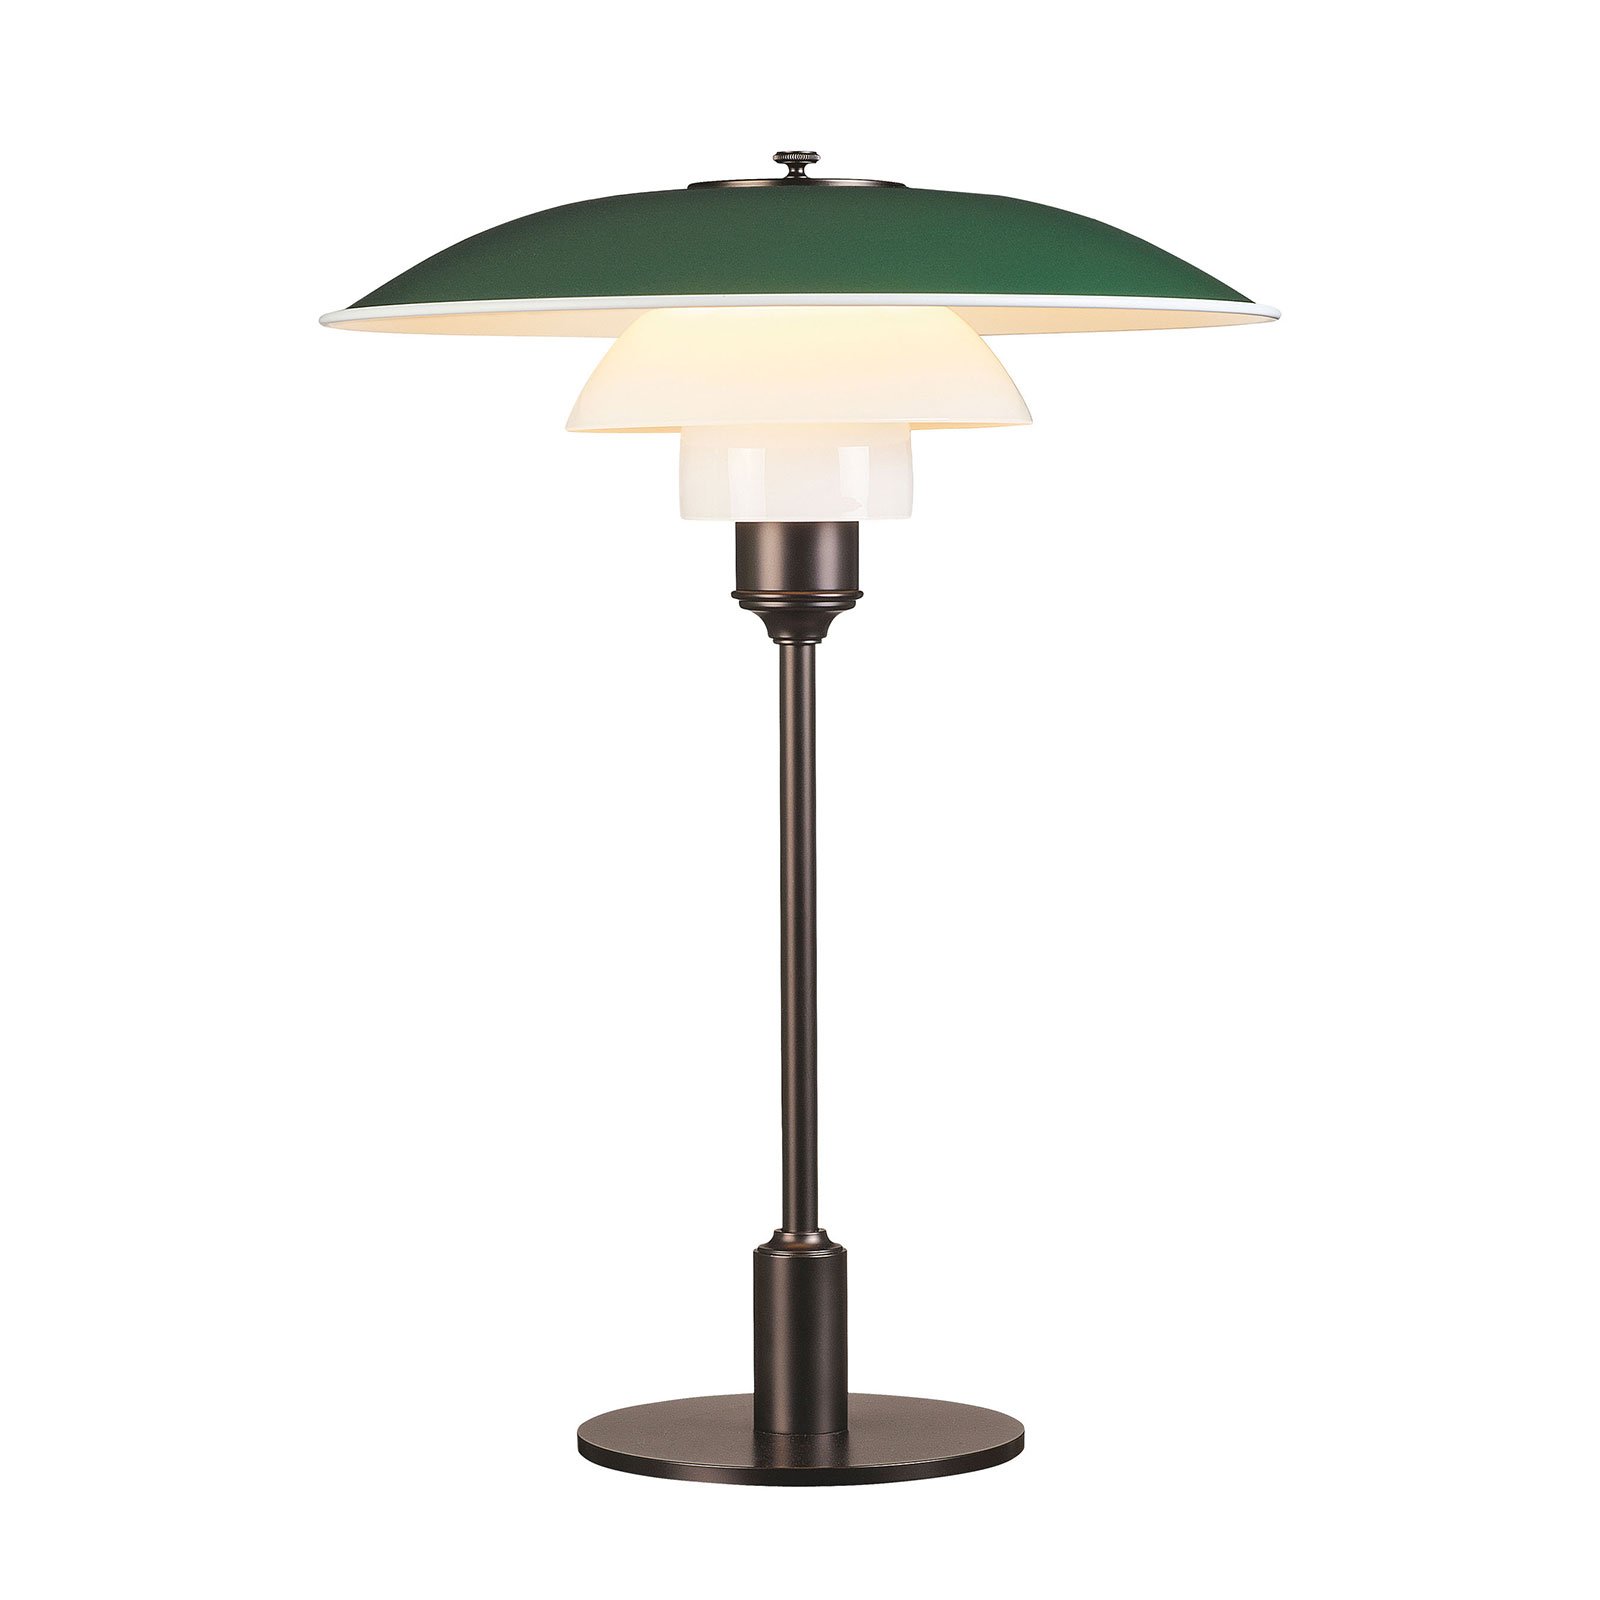 Louis Poulsen PH 3 1/2-2 1/2 stolna svjetiljka smeđa/zelena